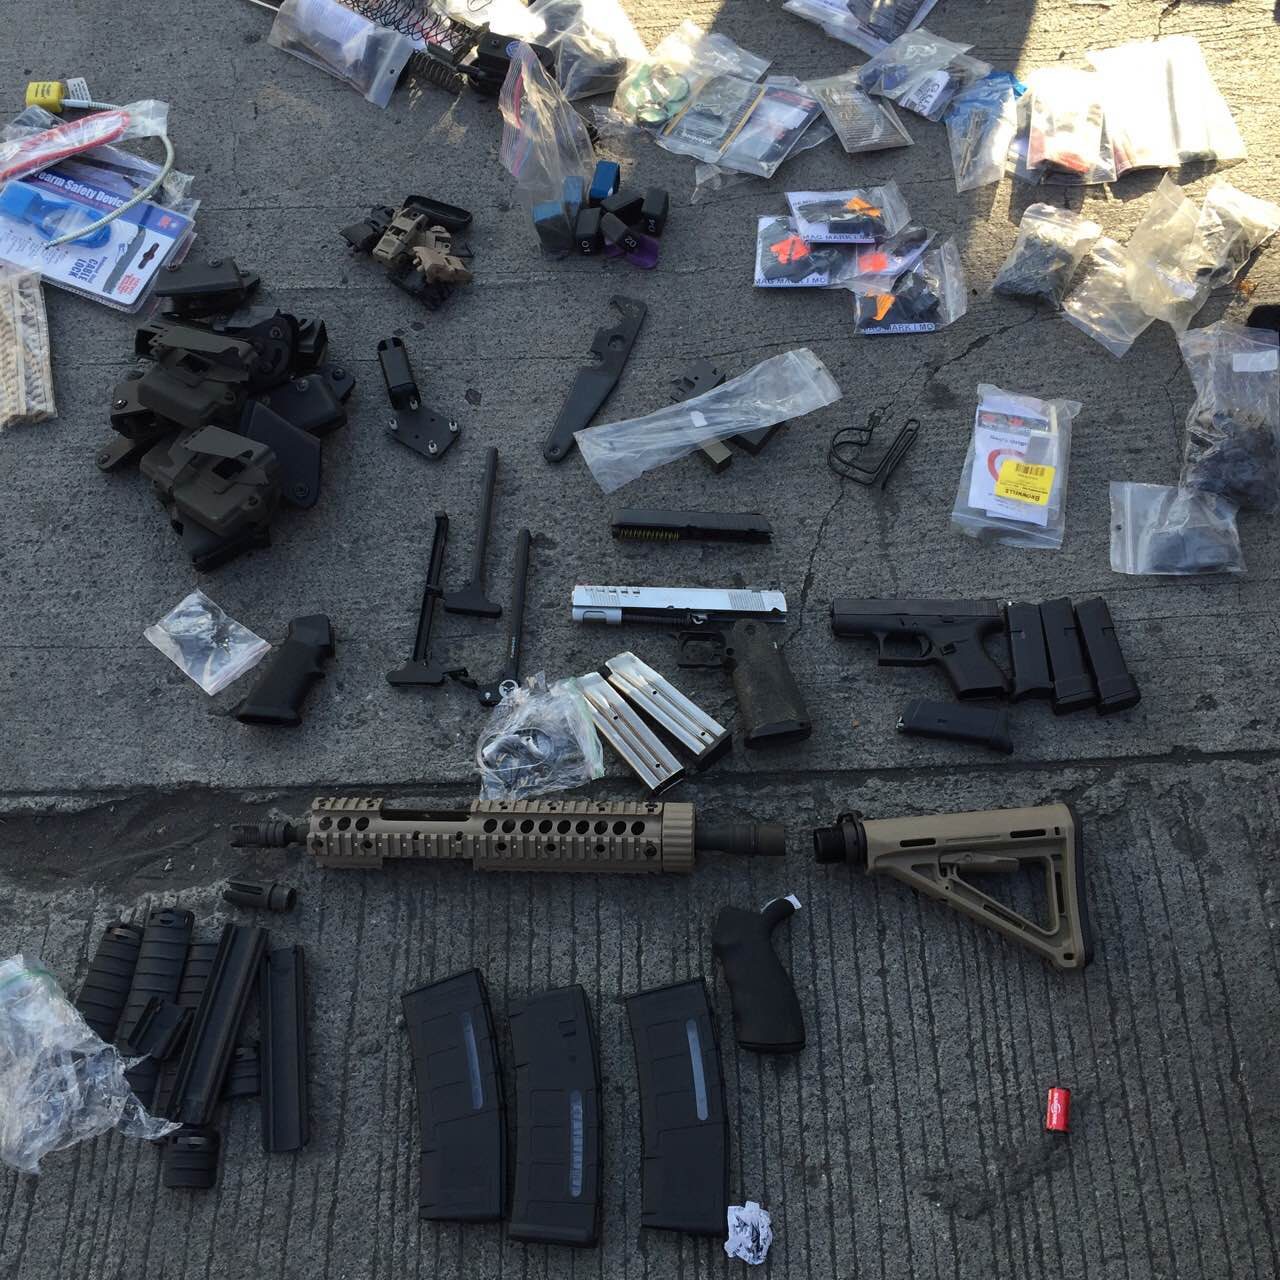 Smuggled from US: Gun parts seized at Cagayan de Oro port